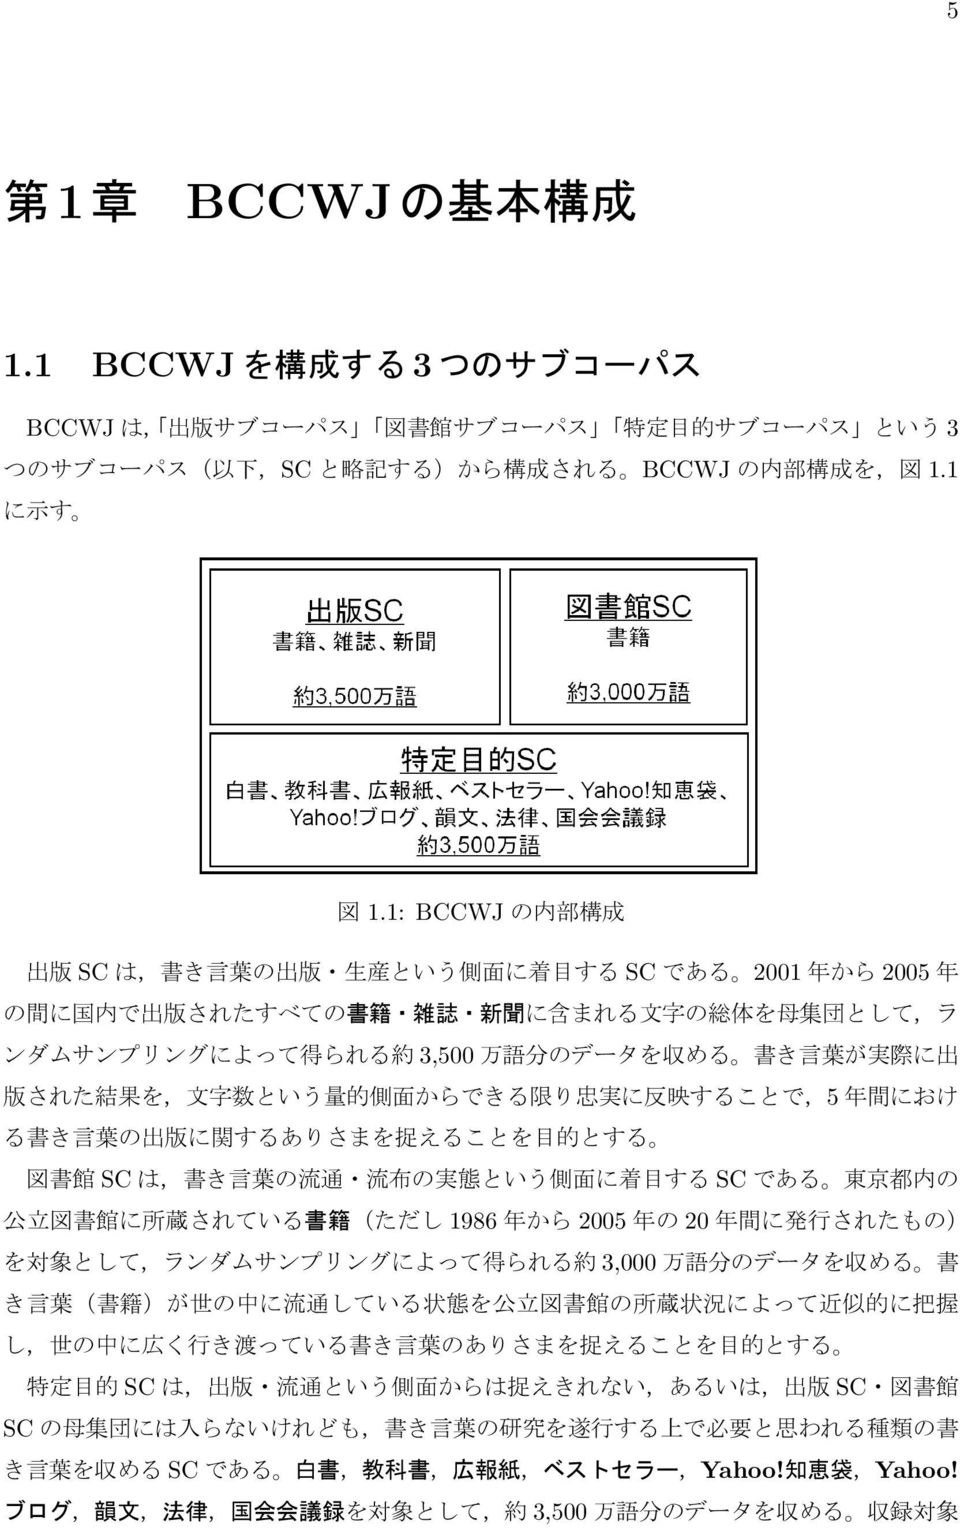 1: BCCWJ SC SC 2001 2005 3,500 5